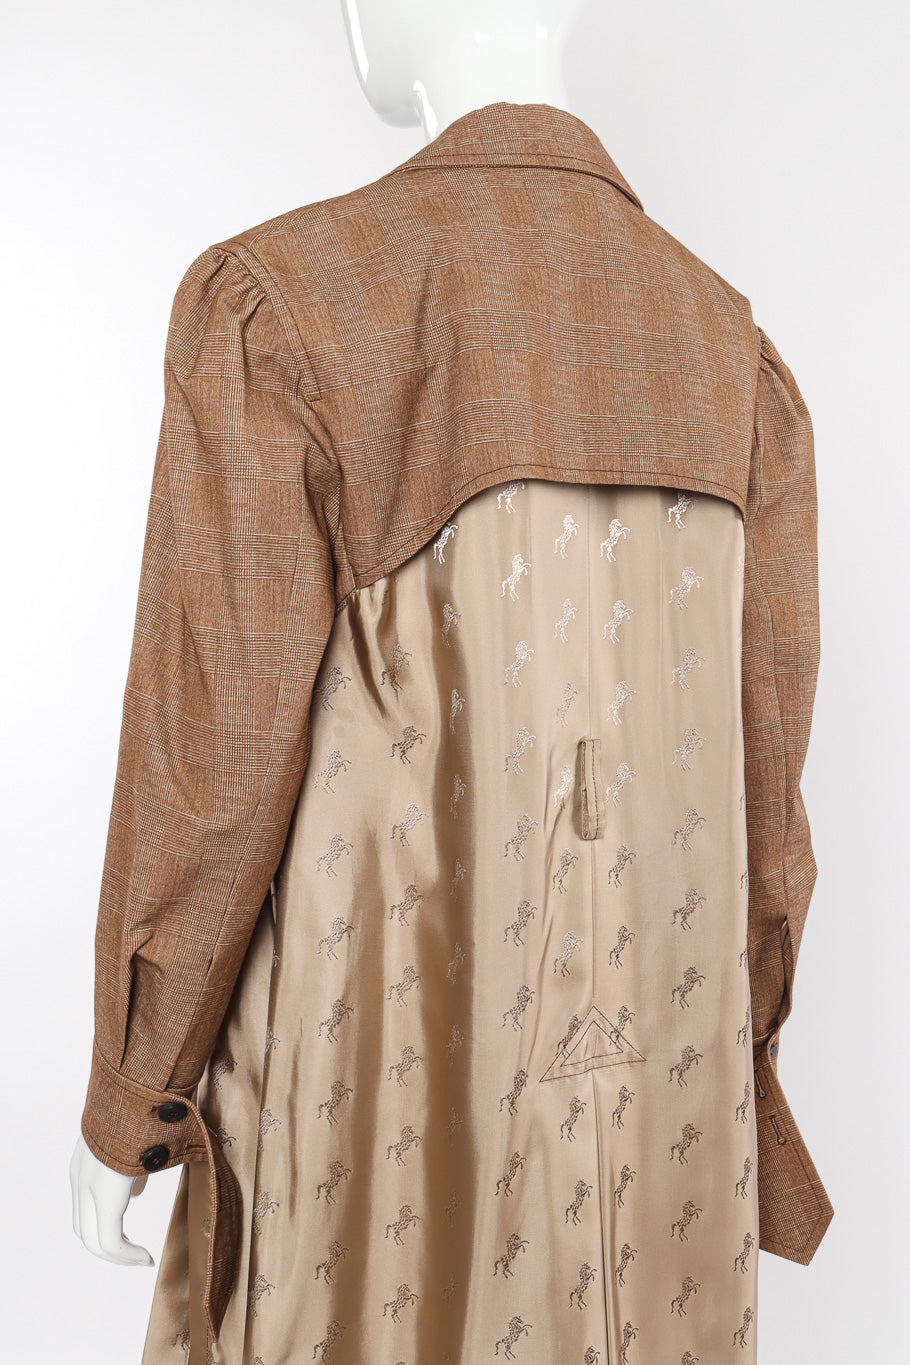 Chloé Equin Print Plaid Trench Coat back view on mannequin closeup @recessla